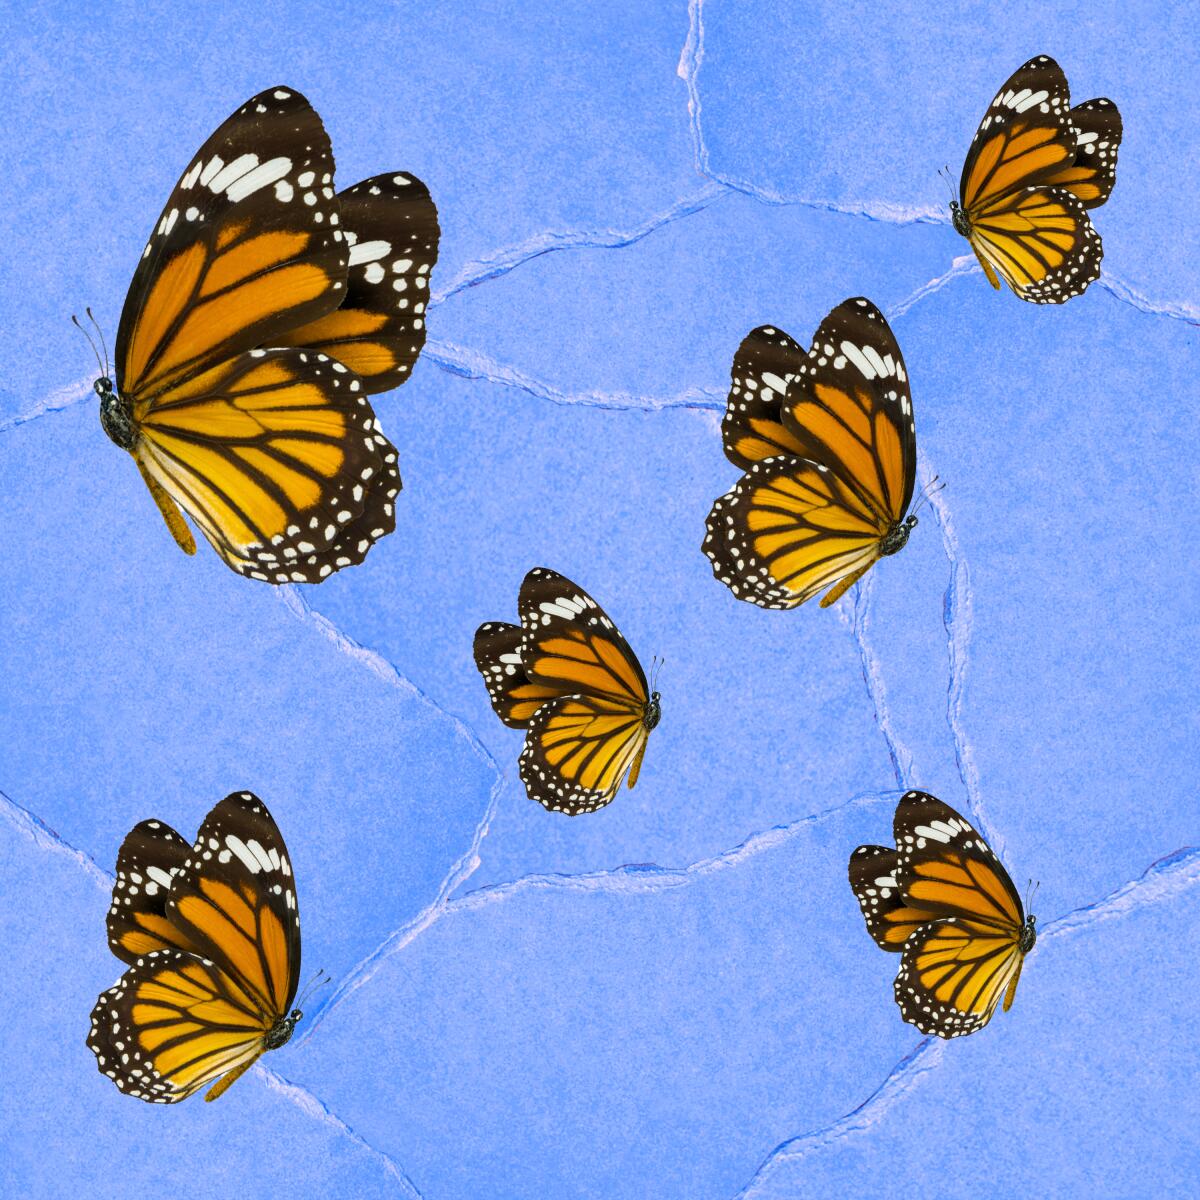 Butterflies on blue background 